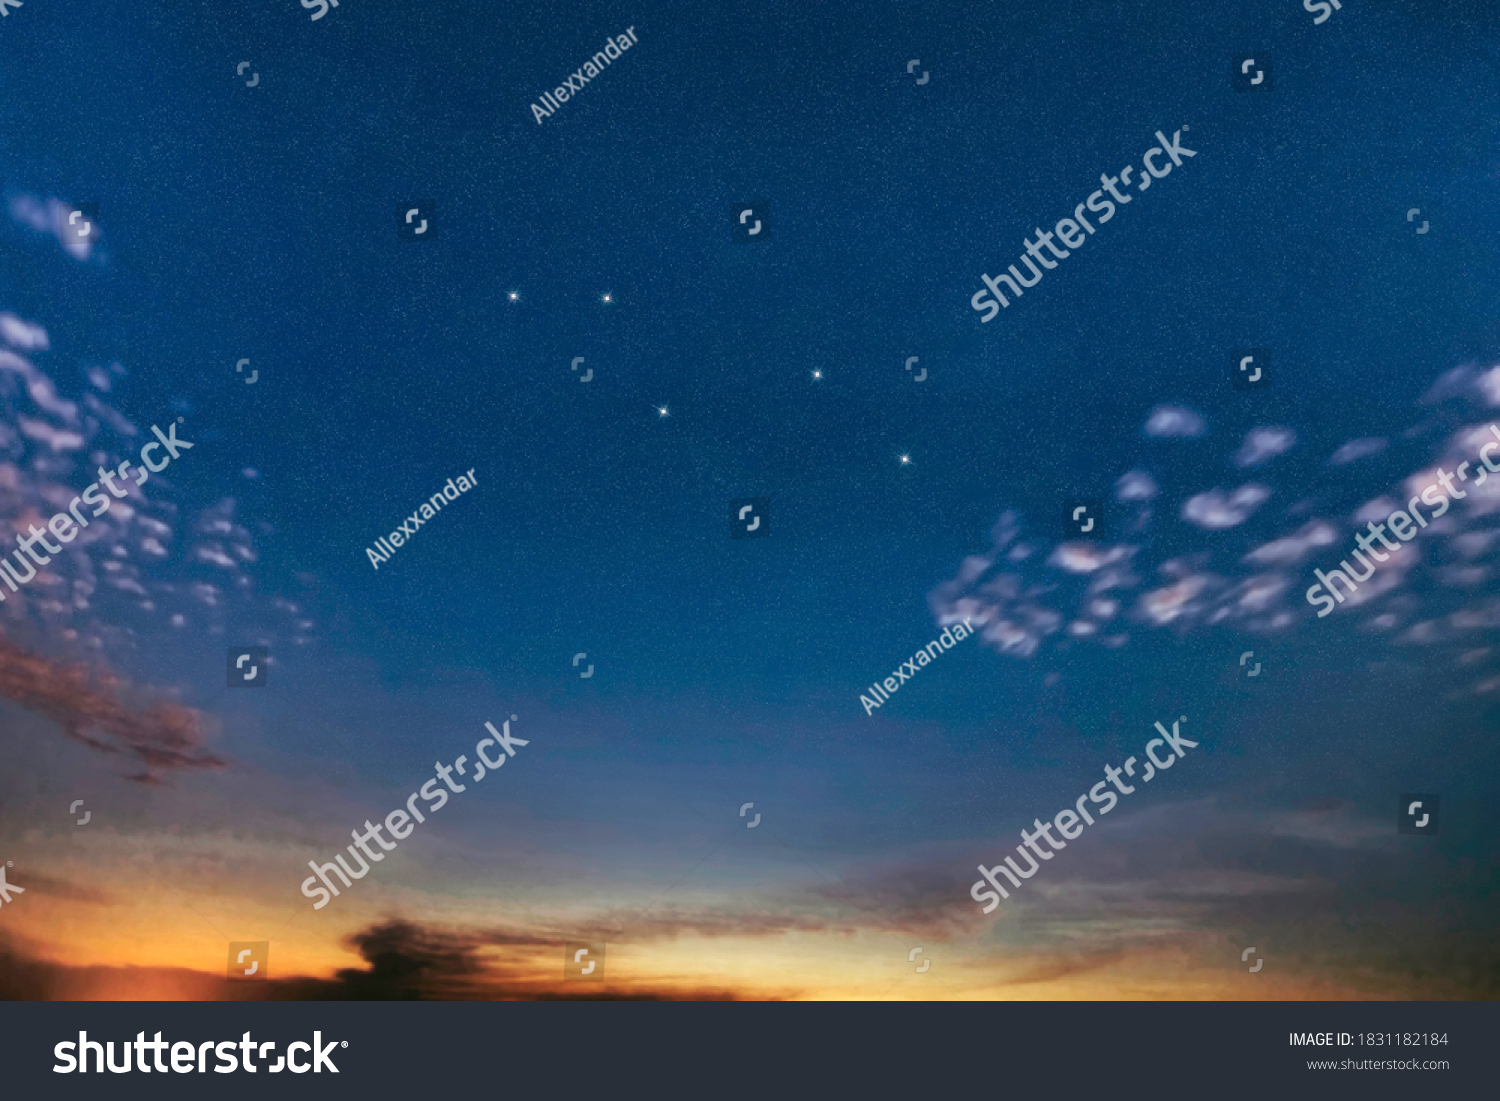 Vulpecula star constellation, Night sky, Cluster of stars, Deep space, Fox constellation   #1831182184